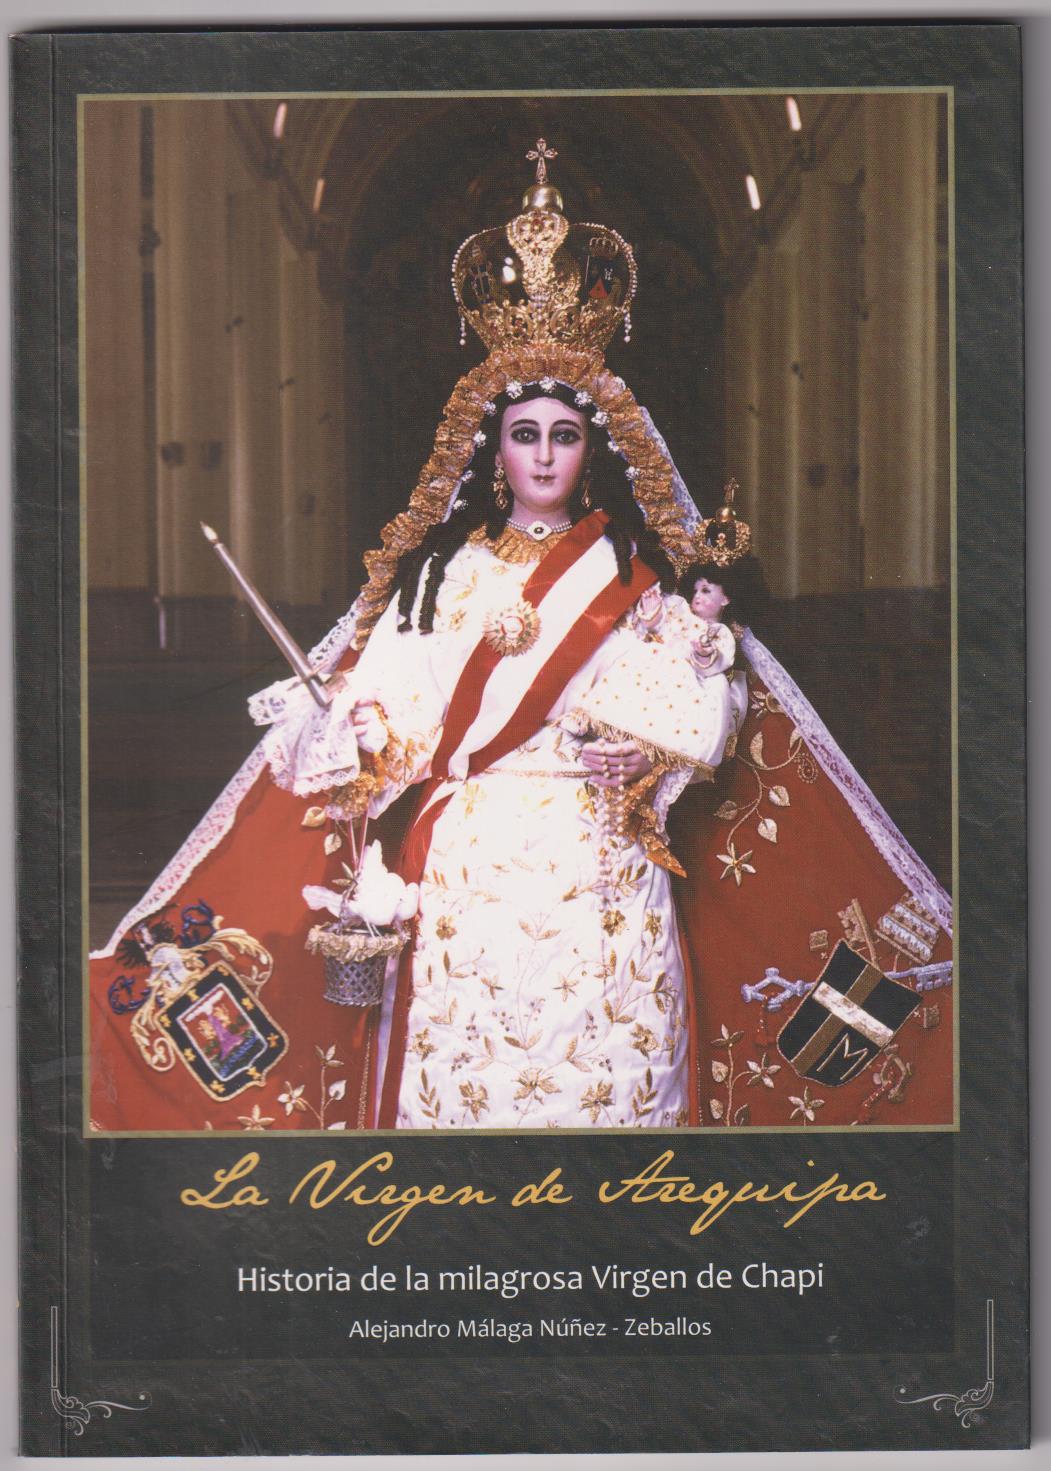 La Virgen de Arequipa. Historia de la Milagrosa Virgen de Chapí por A. Málaga Núñez - Zeballos